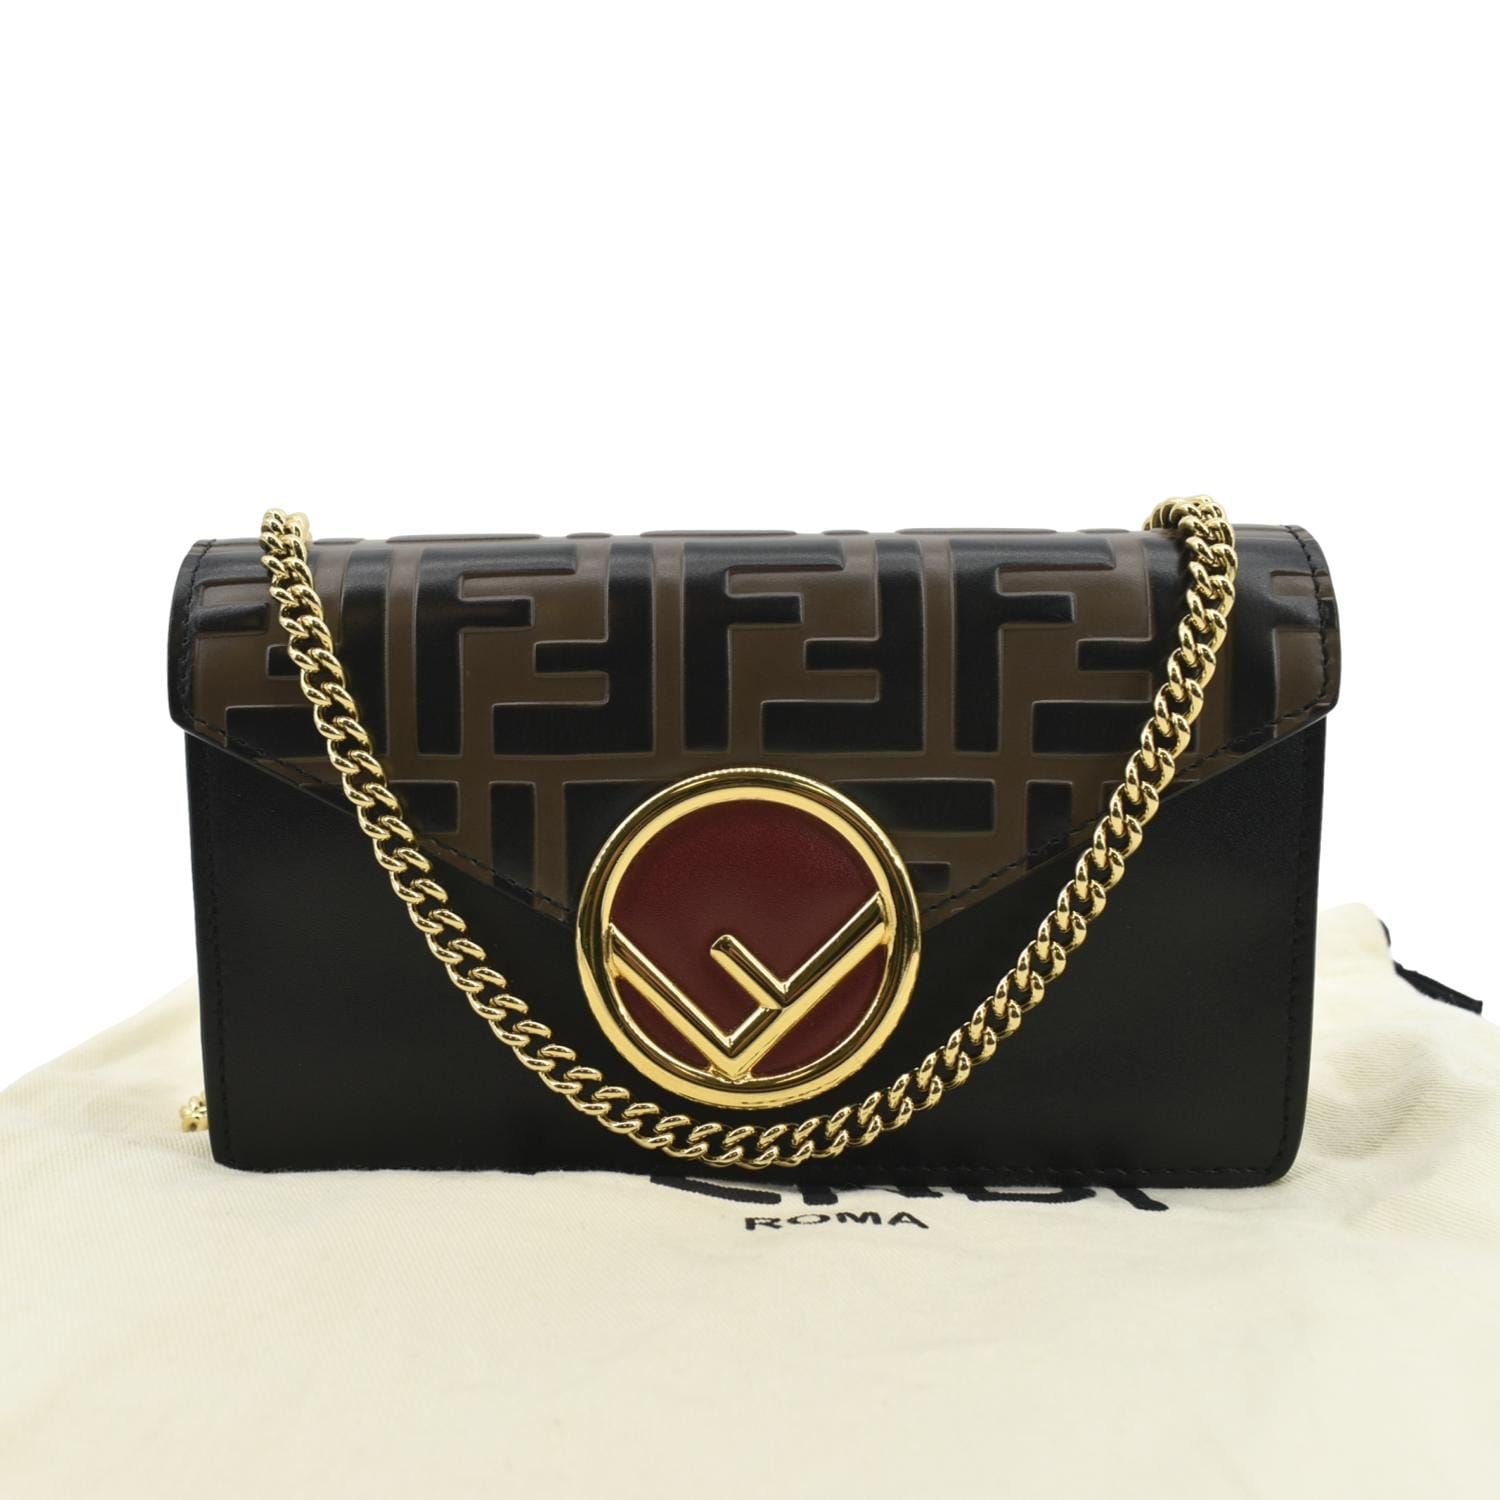 Fendi Black F is Fendi Chain Wallet Bag Fendi